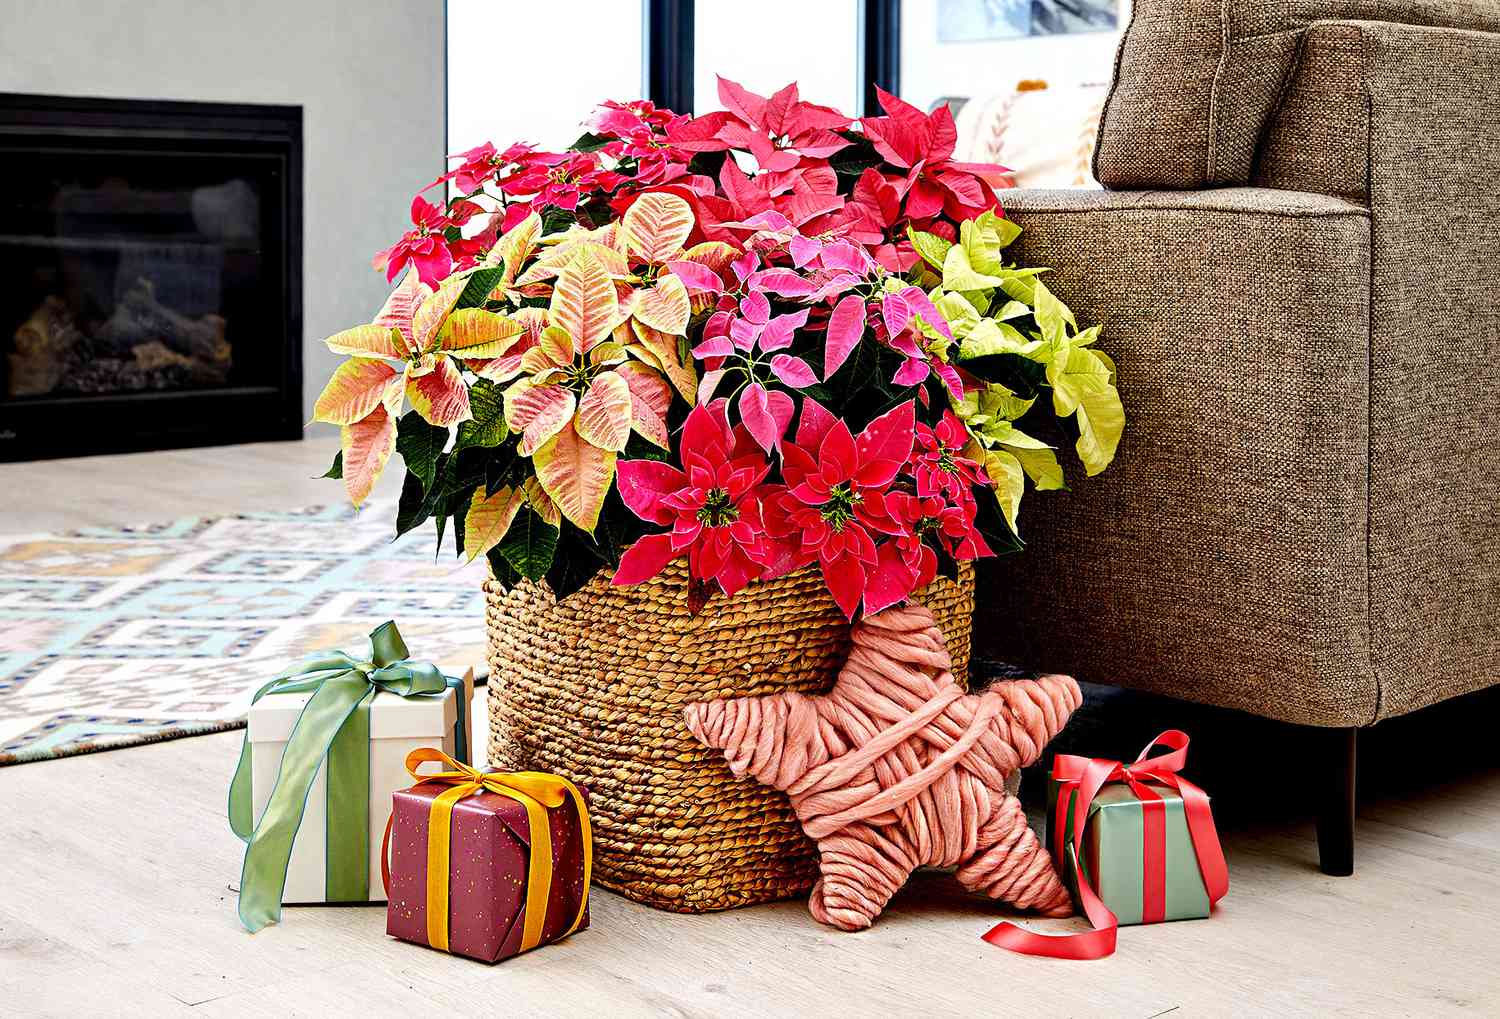 Large Poinsettia Christmas Decorations